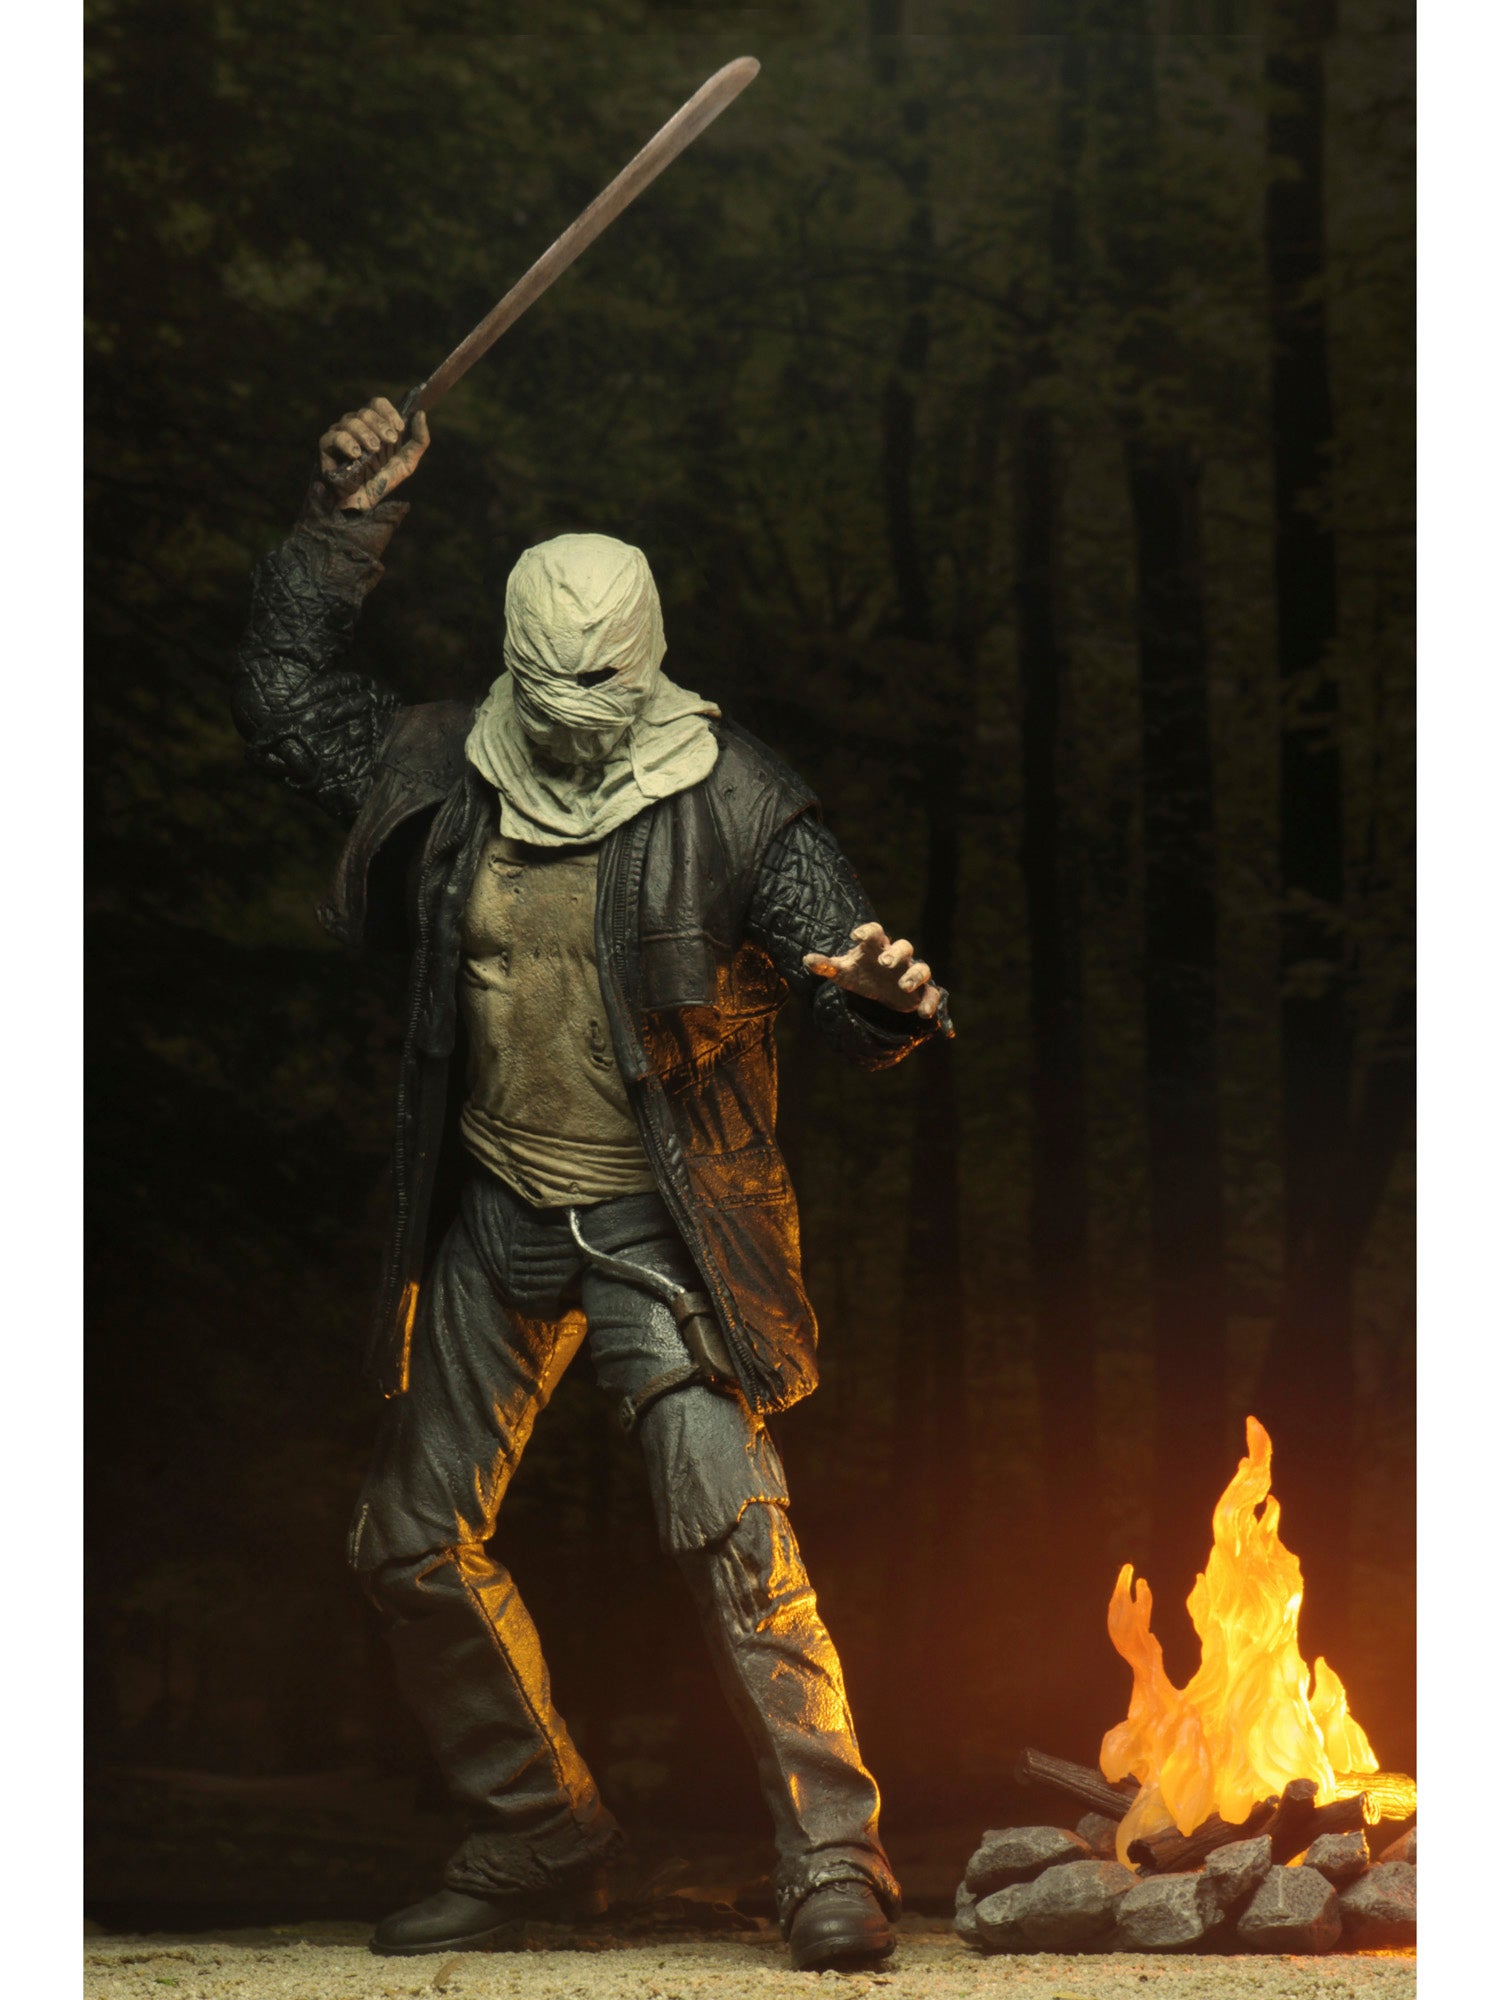 NECA - Friday the 13th - 7" Figure - Ultimate Jason (2009 remake) - costumes.com